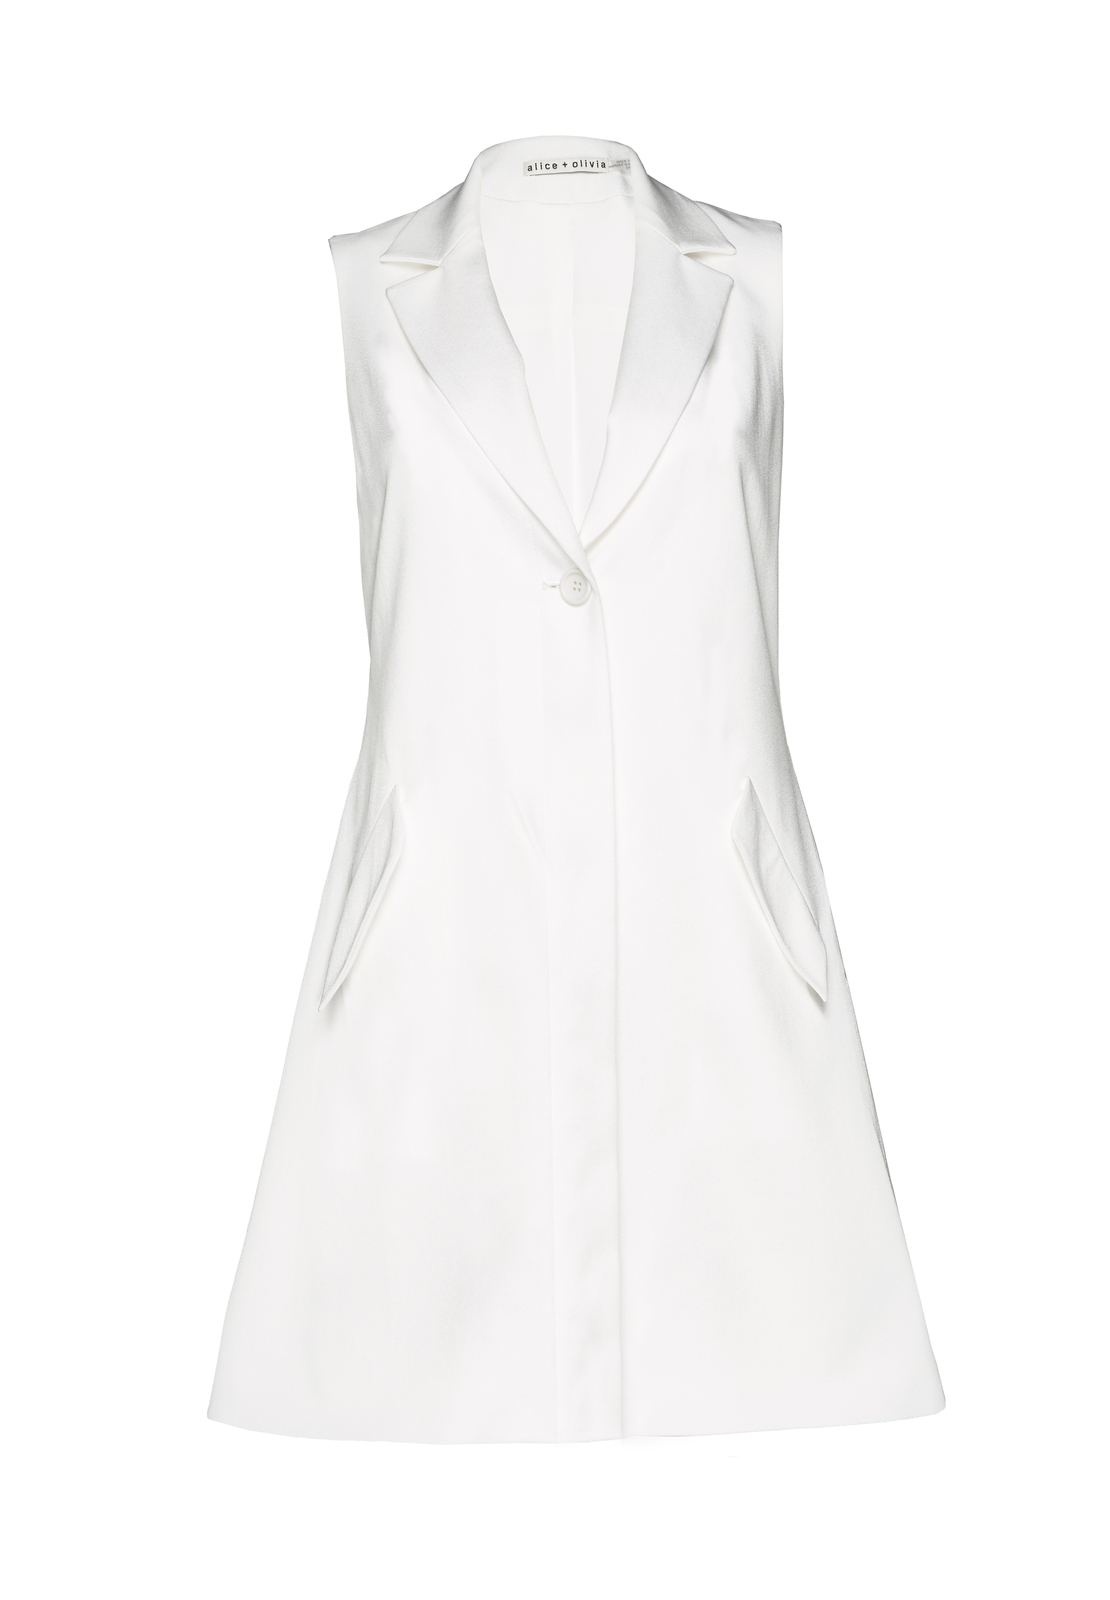 Lyst - Alice + Olivia Melina One Shoulder Dress in White